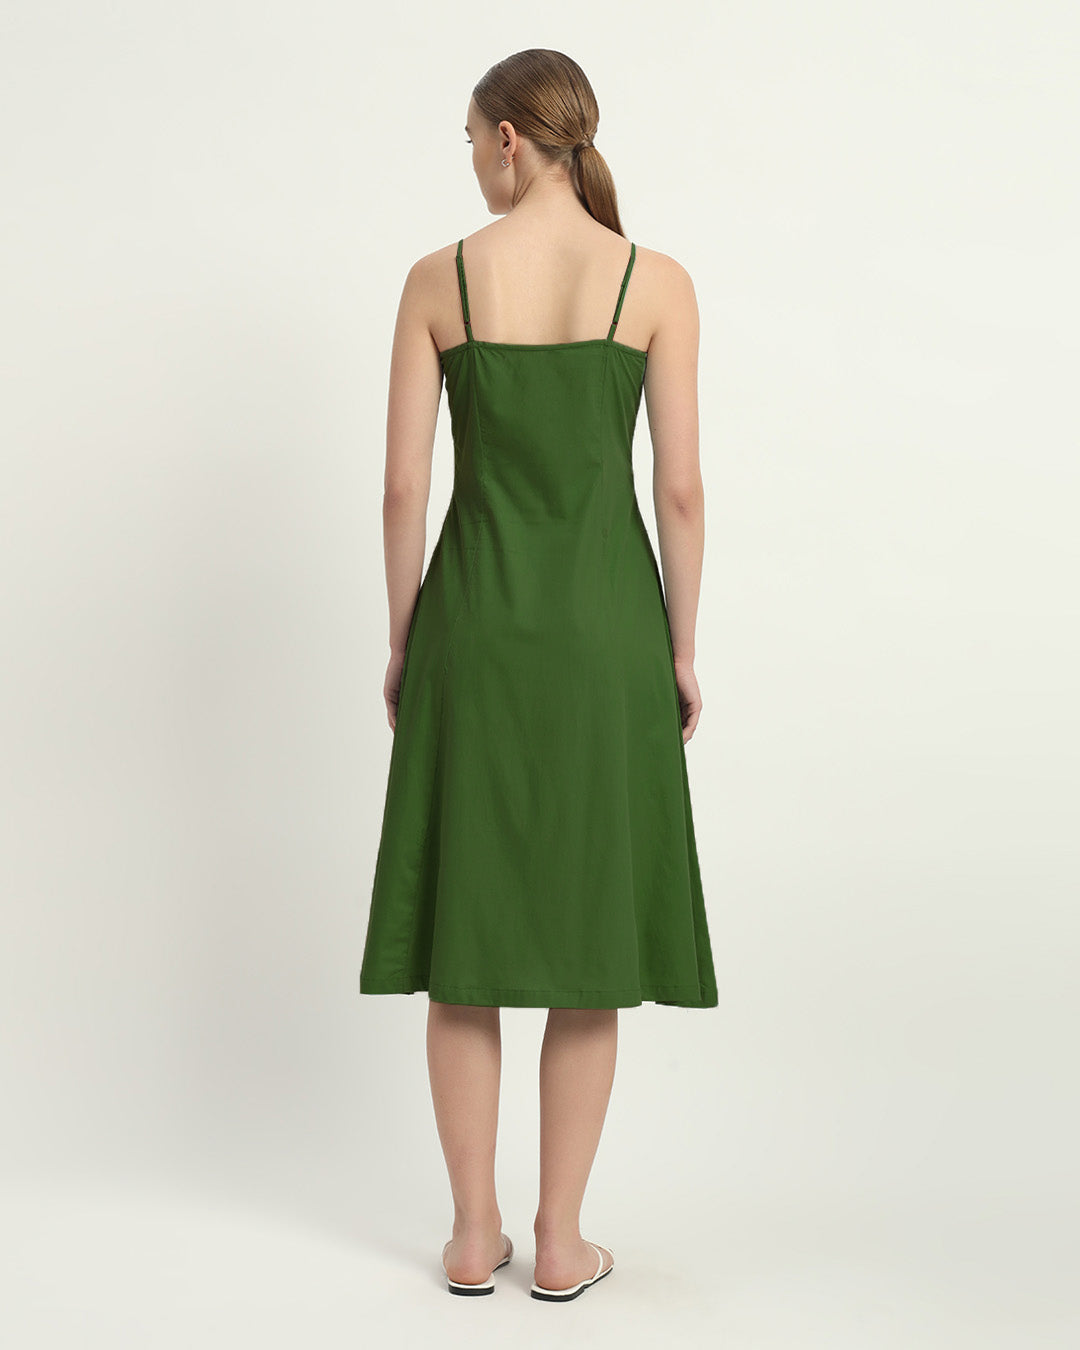 The Valatie Emerald Cotton Dress